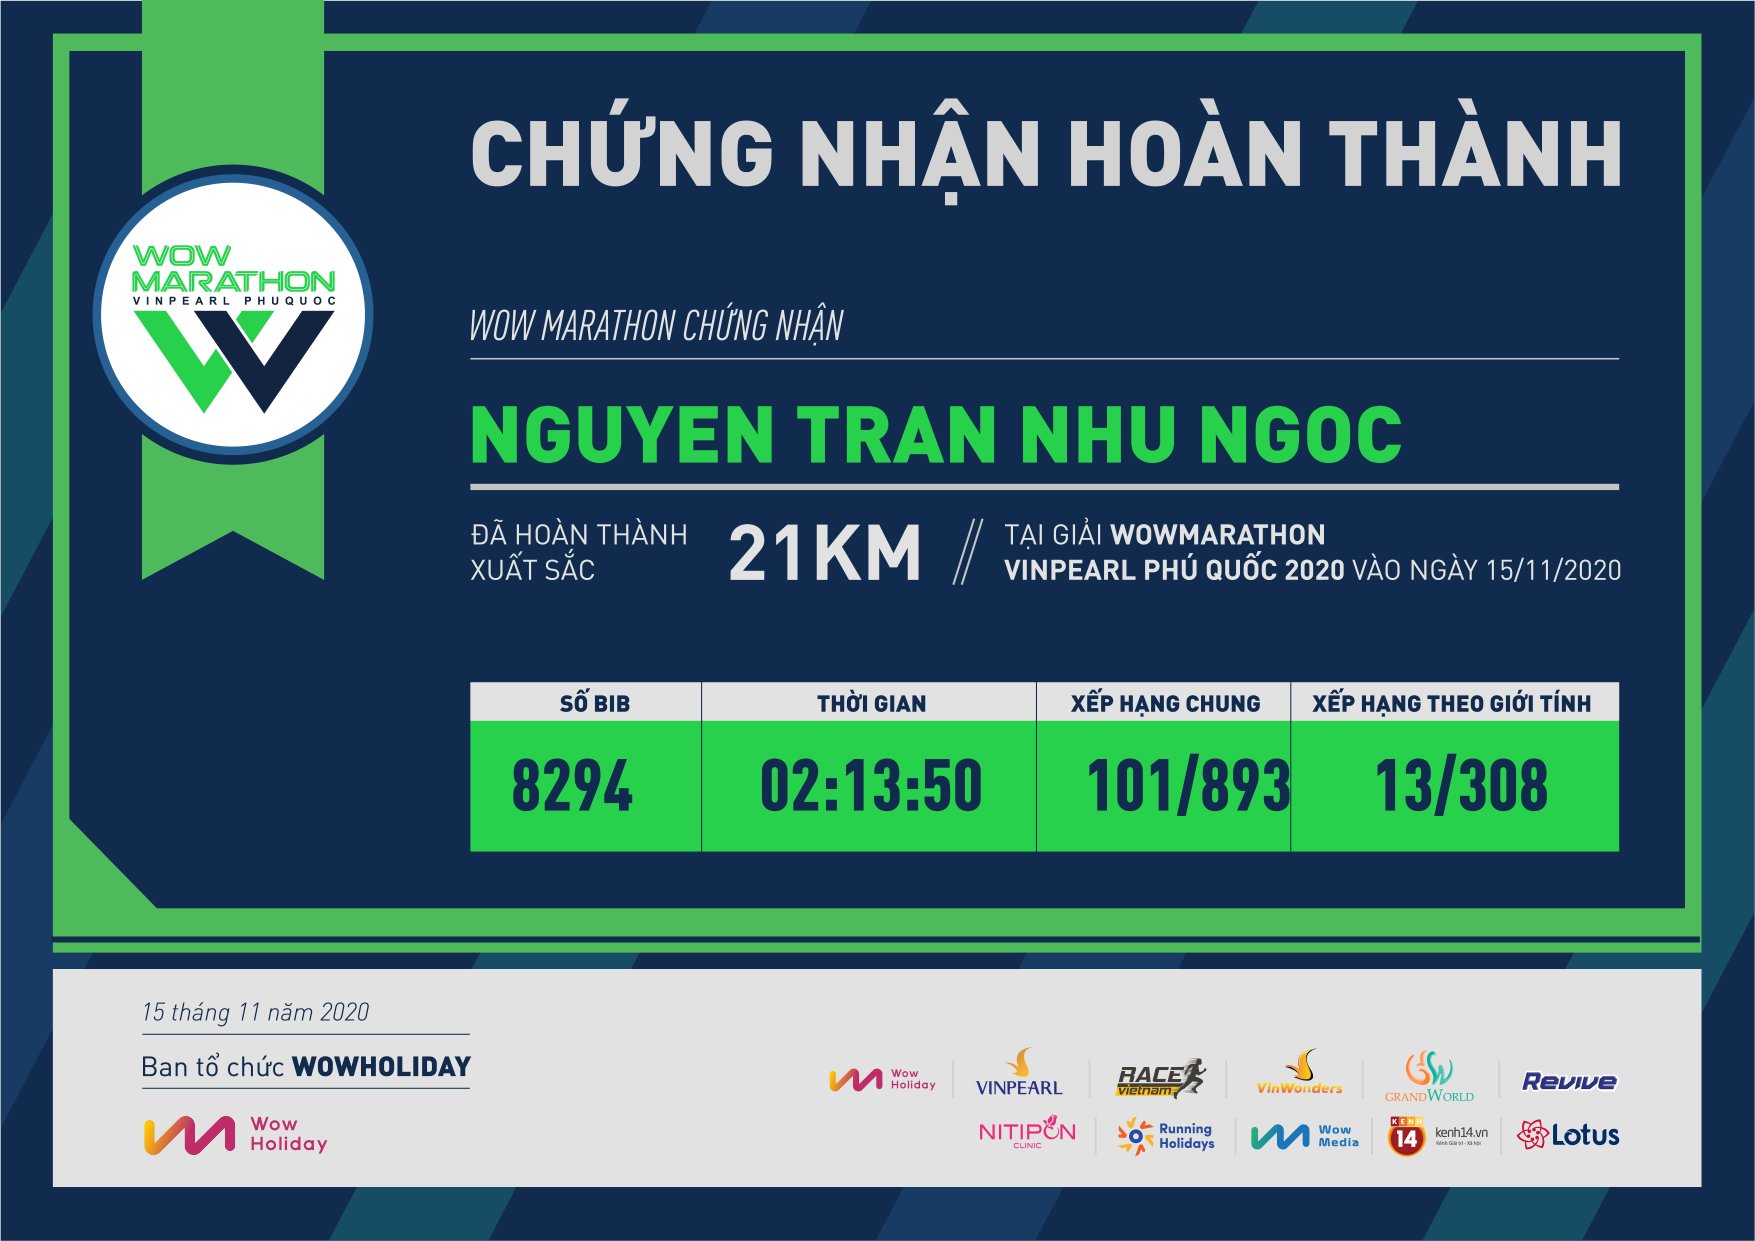 8294 - Nguyen Tran Nhu Ngoc